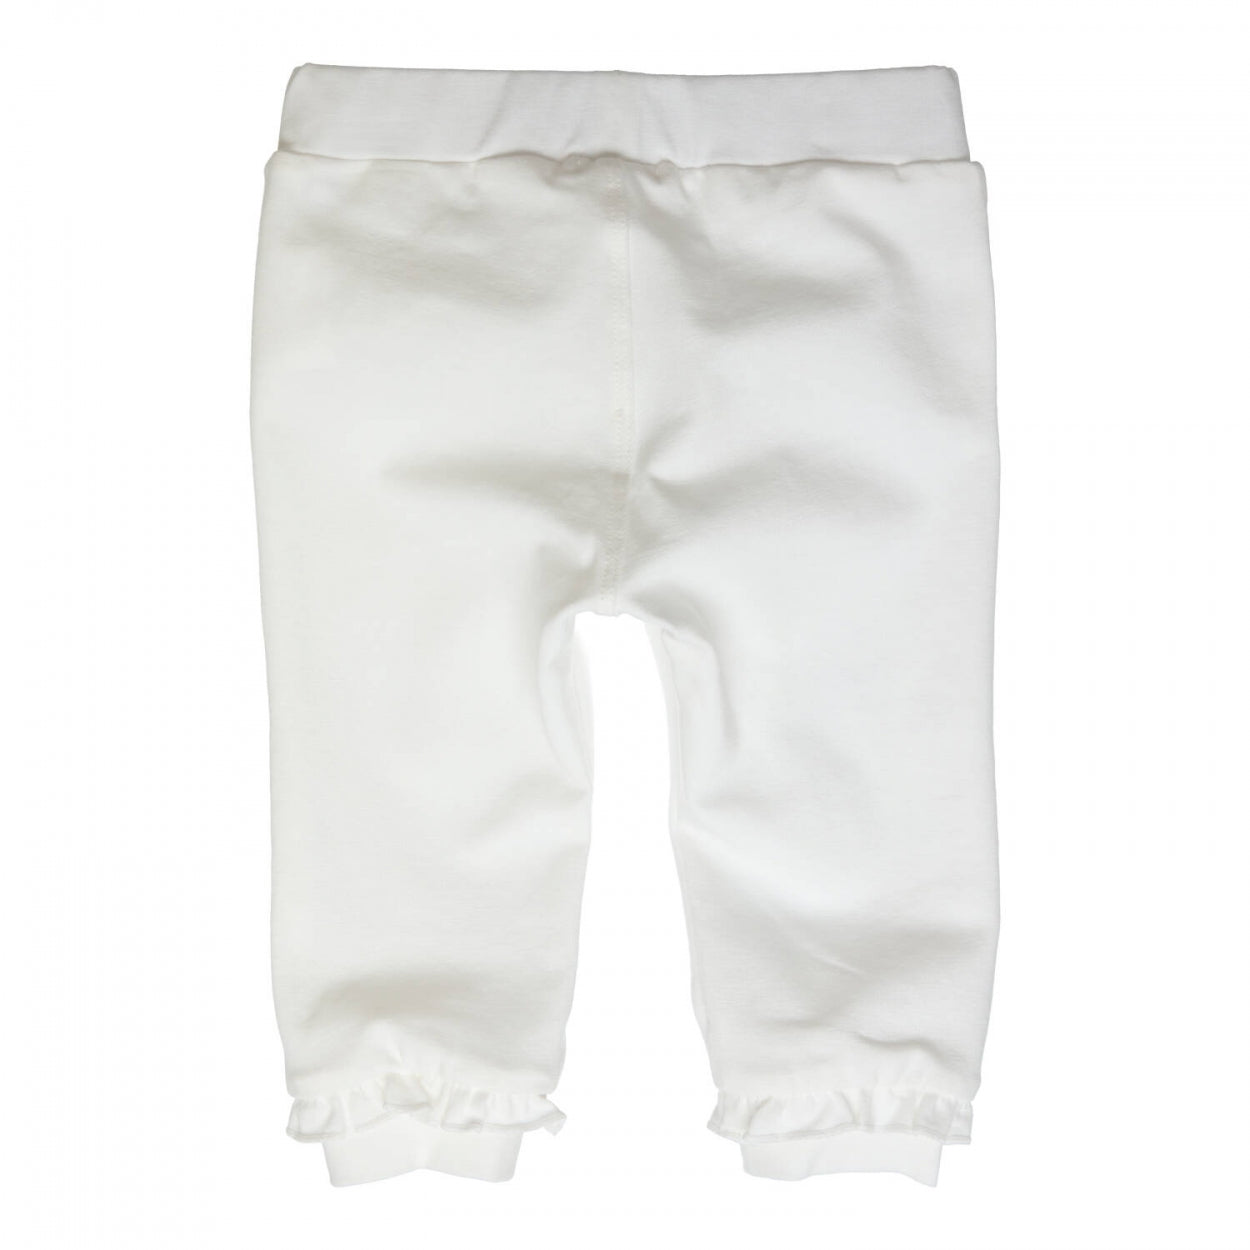 Meisjes Trousers Aerobic van Gymp in de kleur Off White in maat 86.